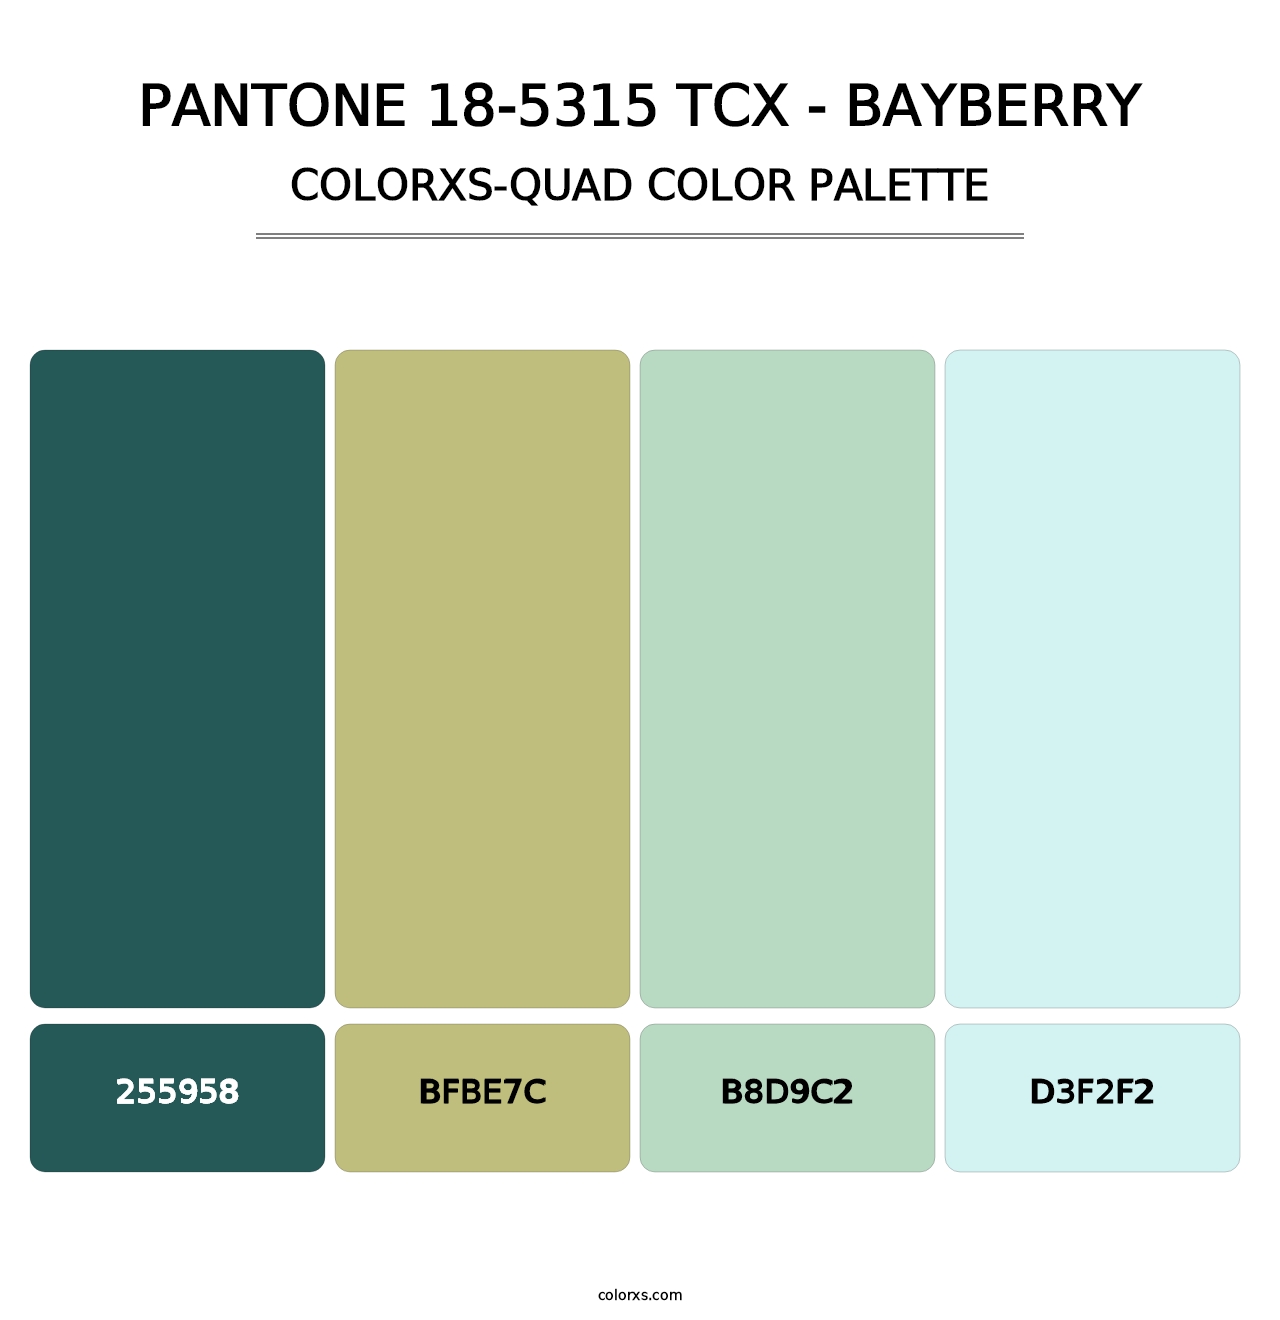 PANTONE 18-5315 TCX - Bayberry - Colorxs Quad Palette